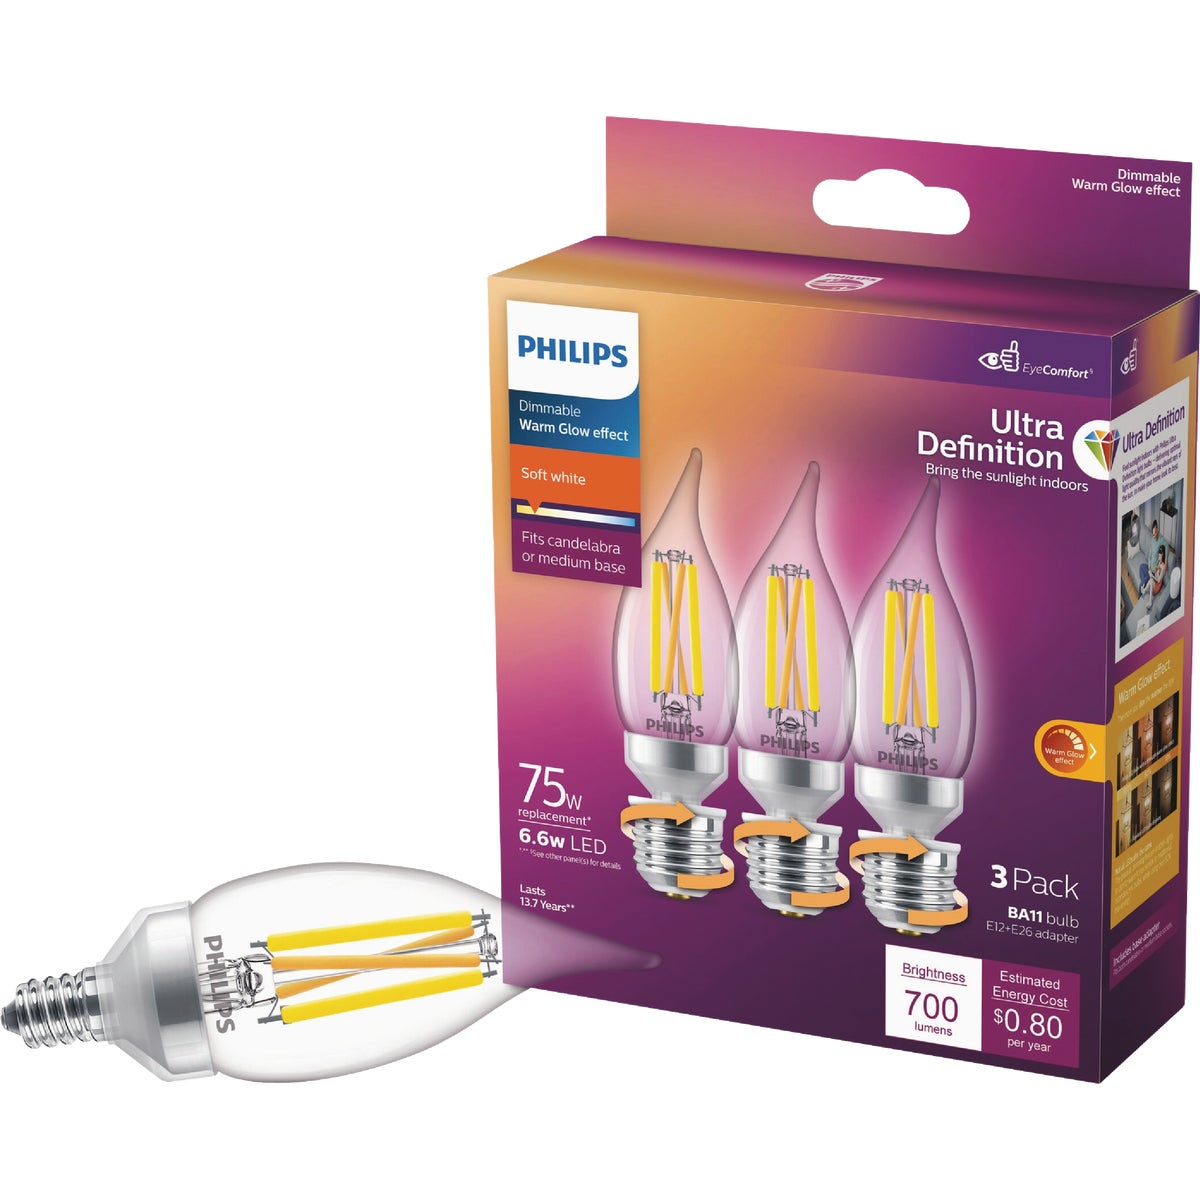 Philips Ultra Definition 75W Equivalent Soft White BA11 Adjustable Base (E12 & E26) LED Decorative Light Bulb (3-Pack)